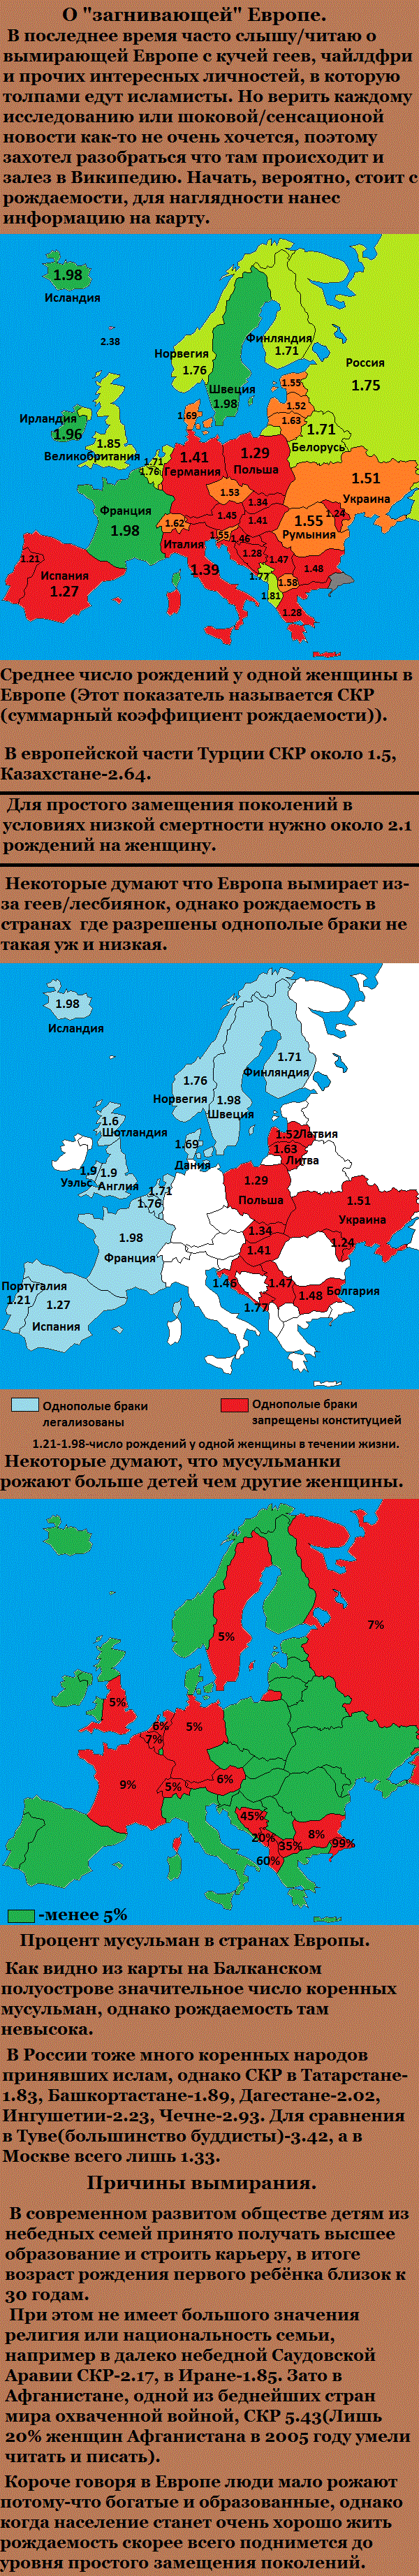    https://en.wikipedia.org/wiki/Demographics_of_Russia  https://en.wikipedia.org/wiki/Islam_in_Europe  https://en.wikipedia.org/wiki/Total_fertility_rate